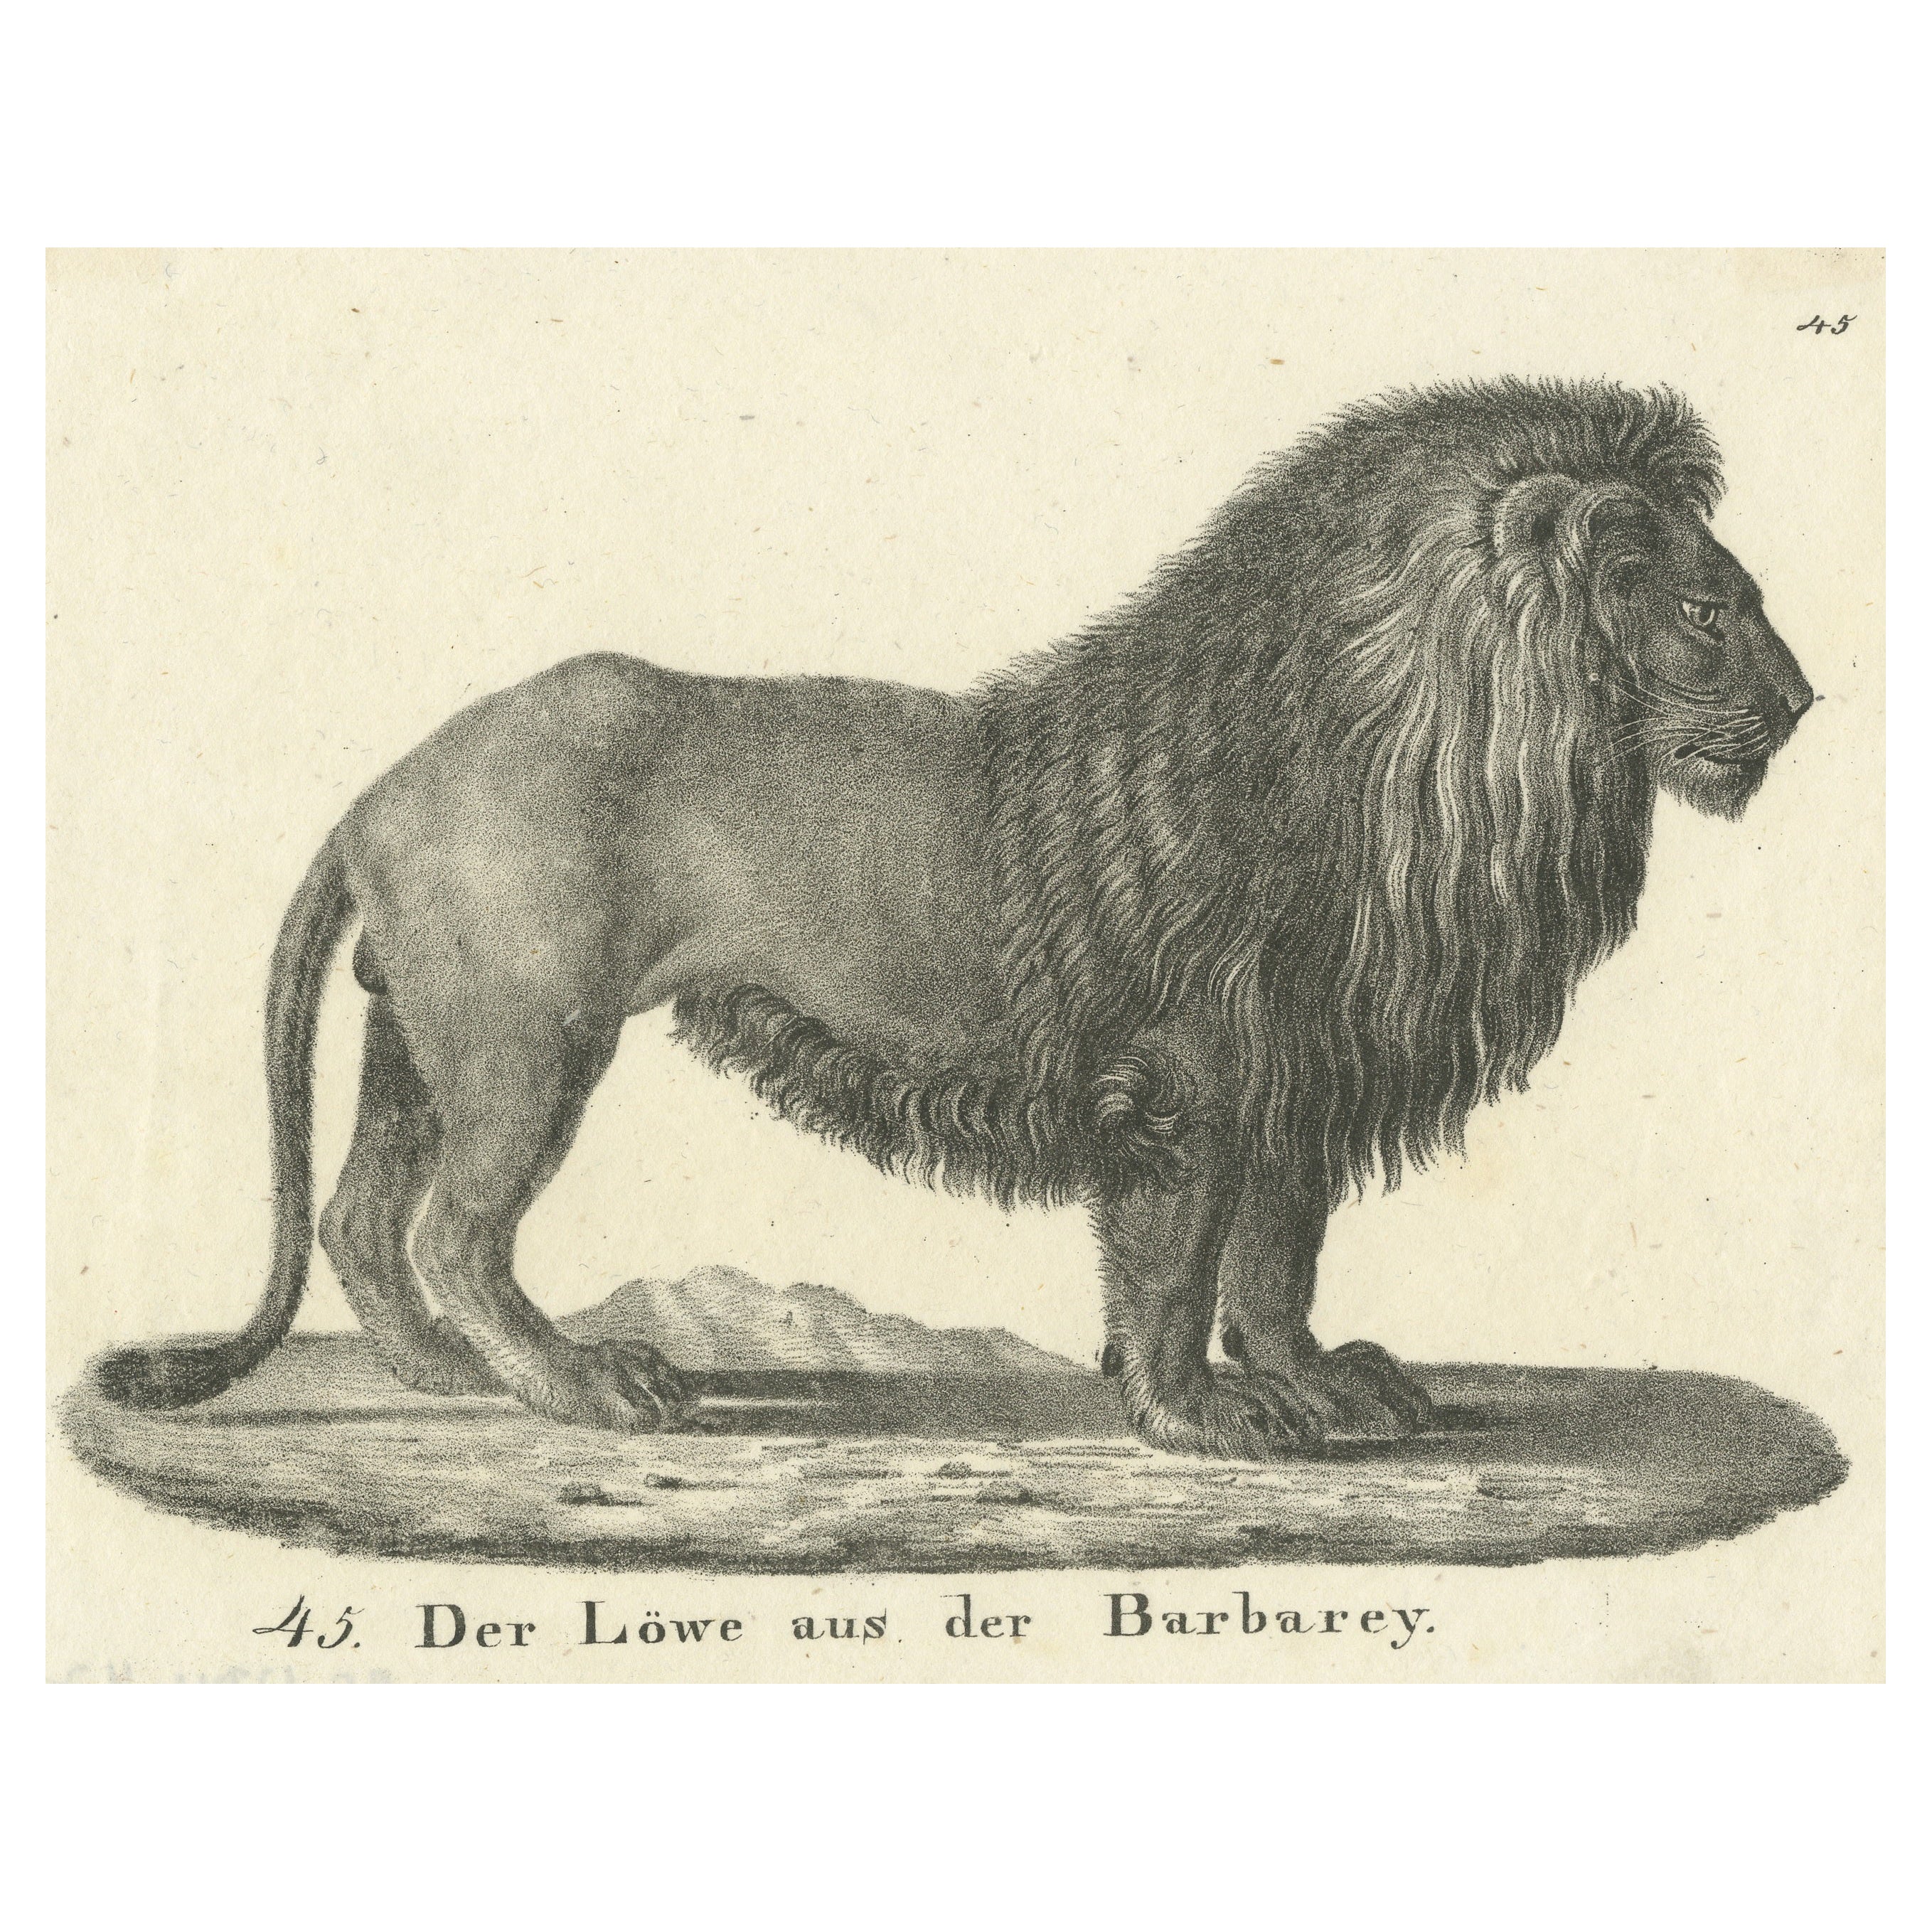 Original Antique Print of a Barbary Lion For Sale